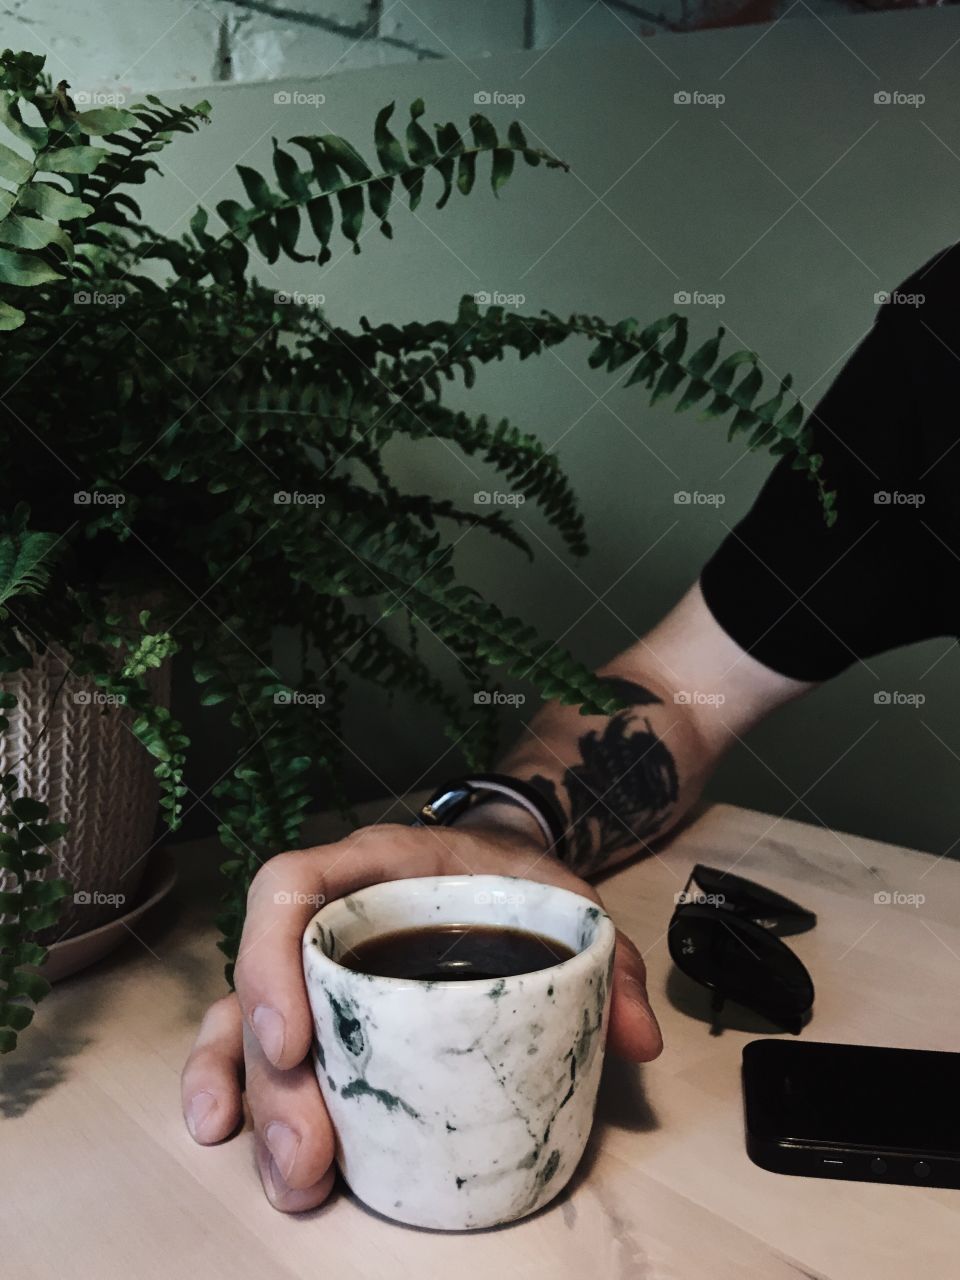 Plants, coffee, hands